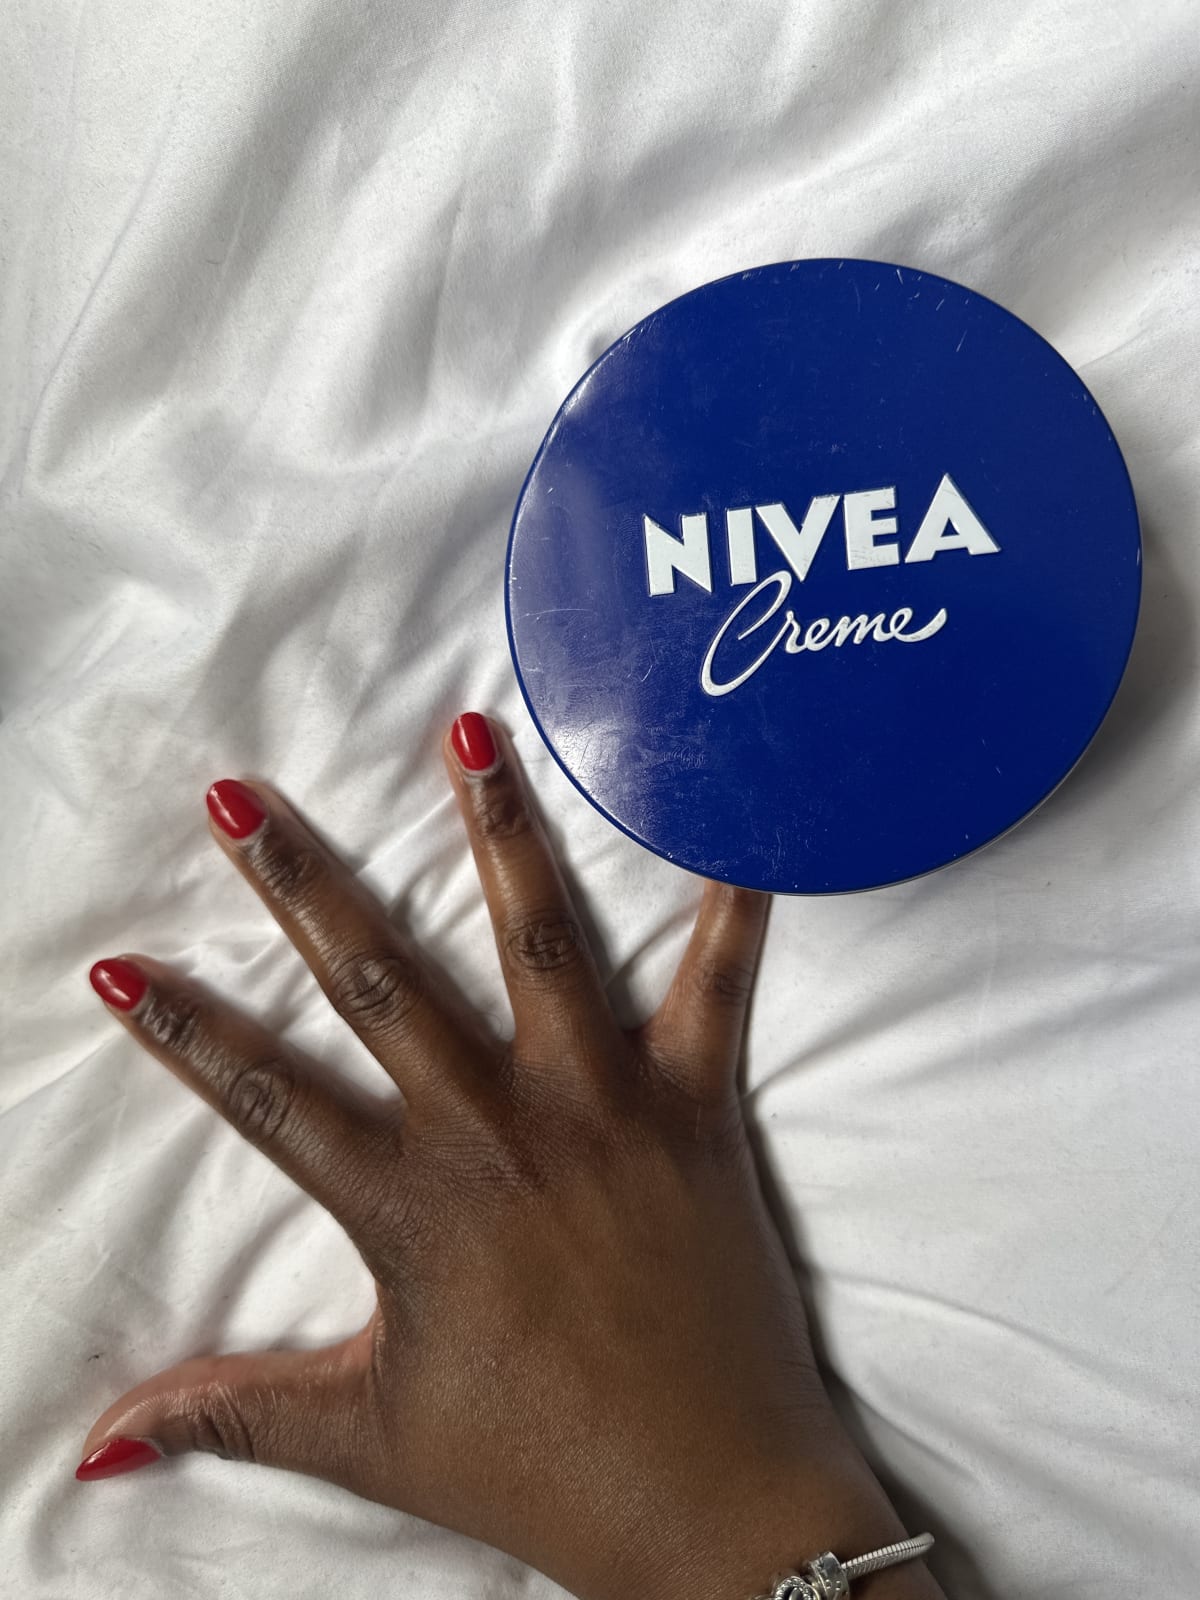 Nivea - Creme - Intense Cream - review image